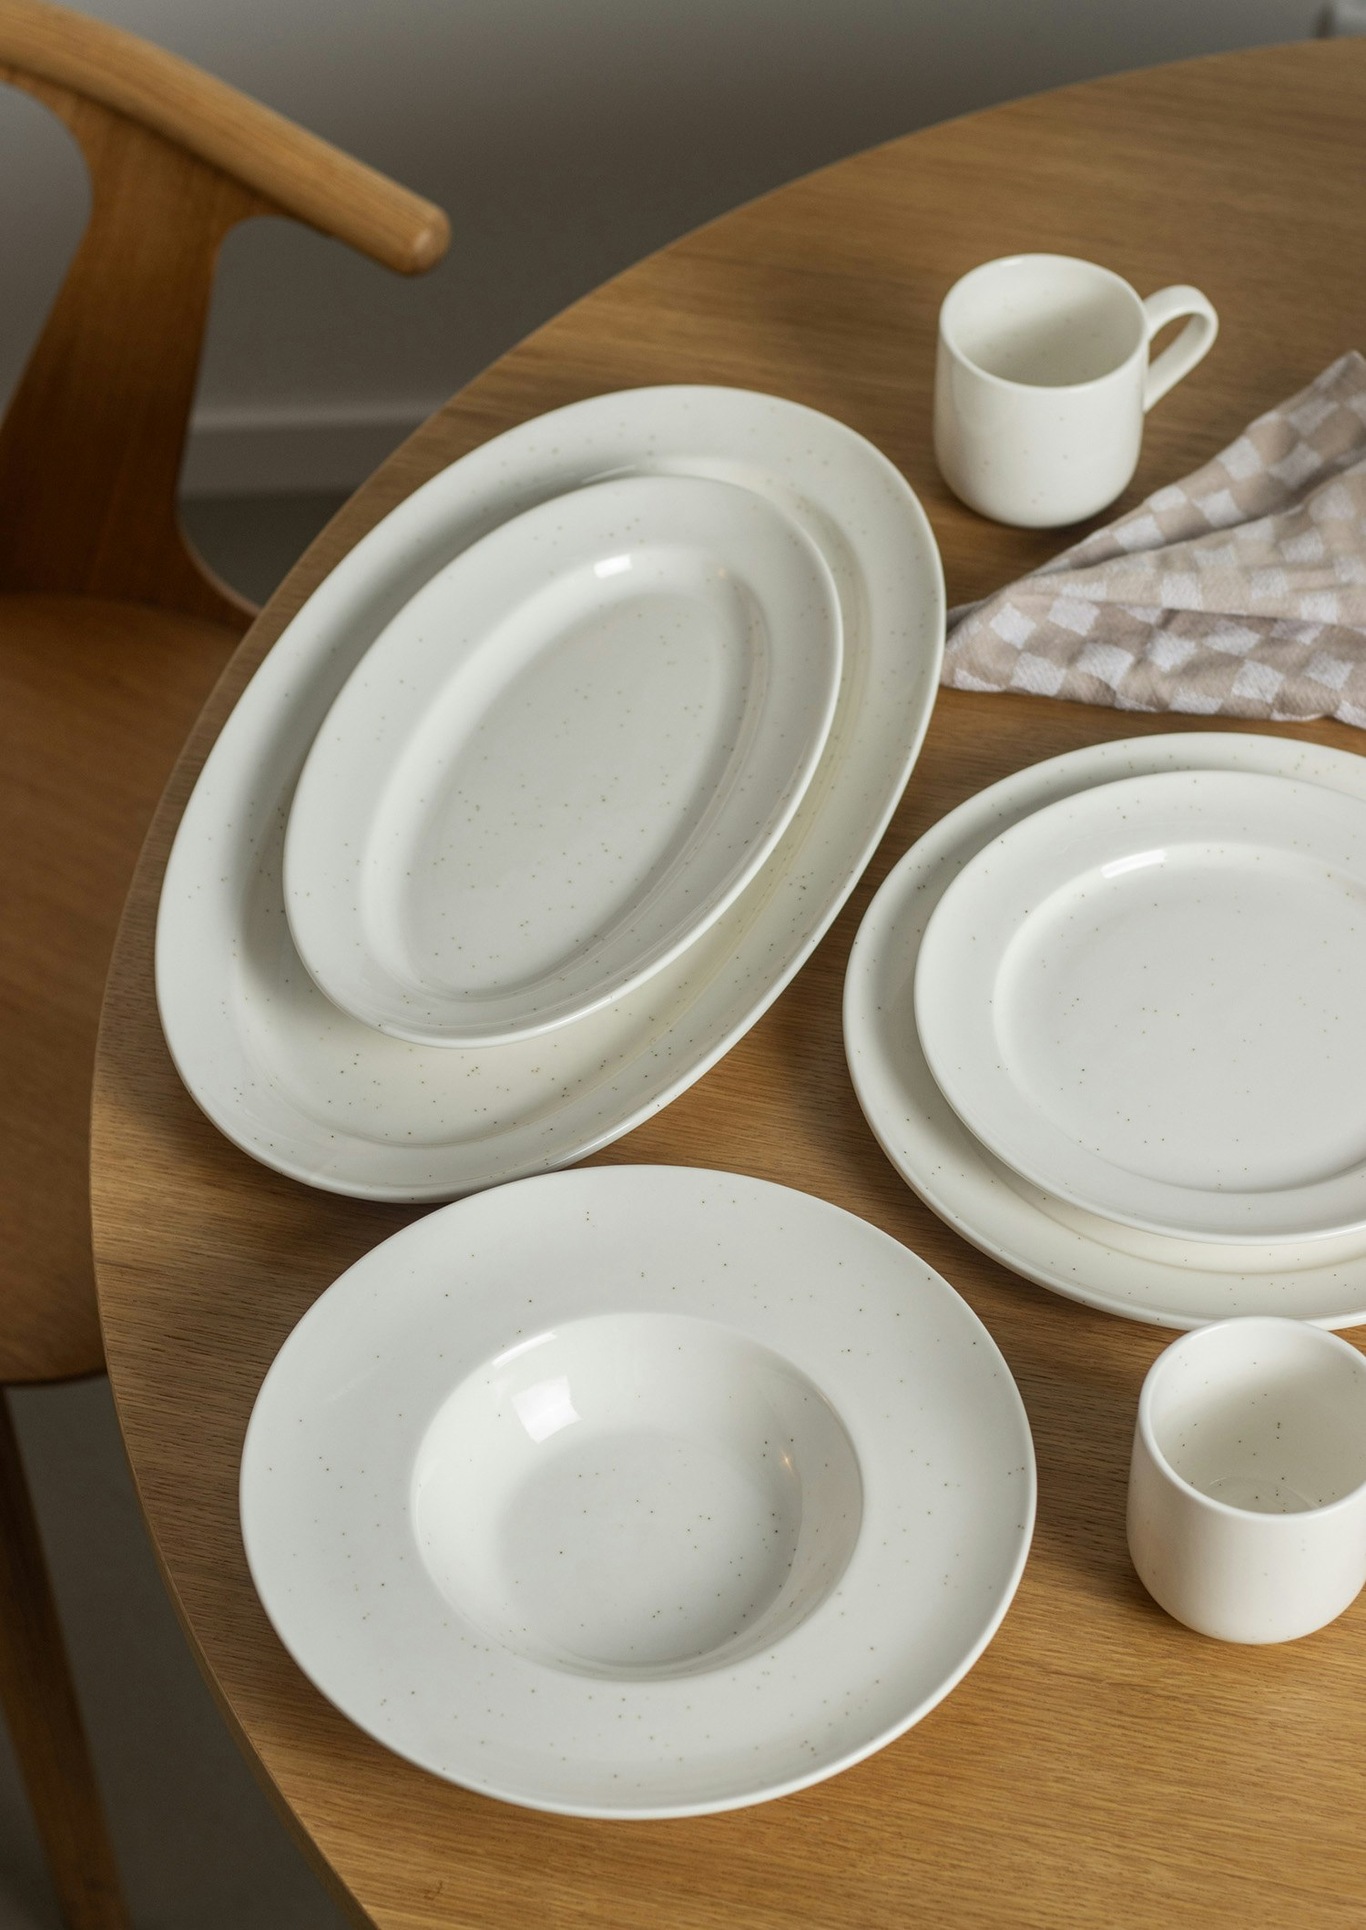 10 White Porcelain Deep Plate